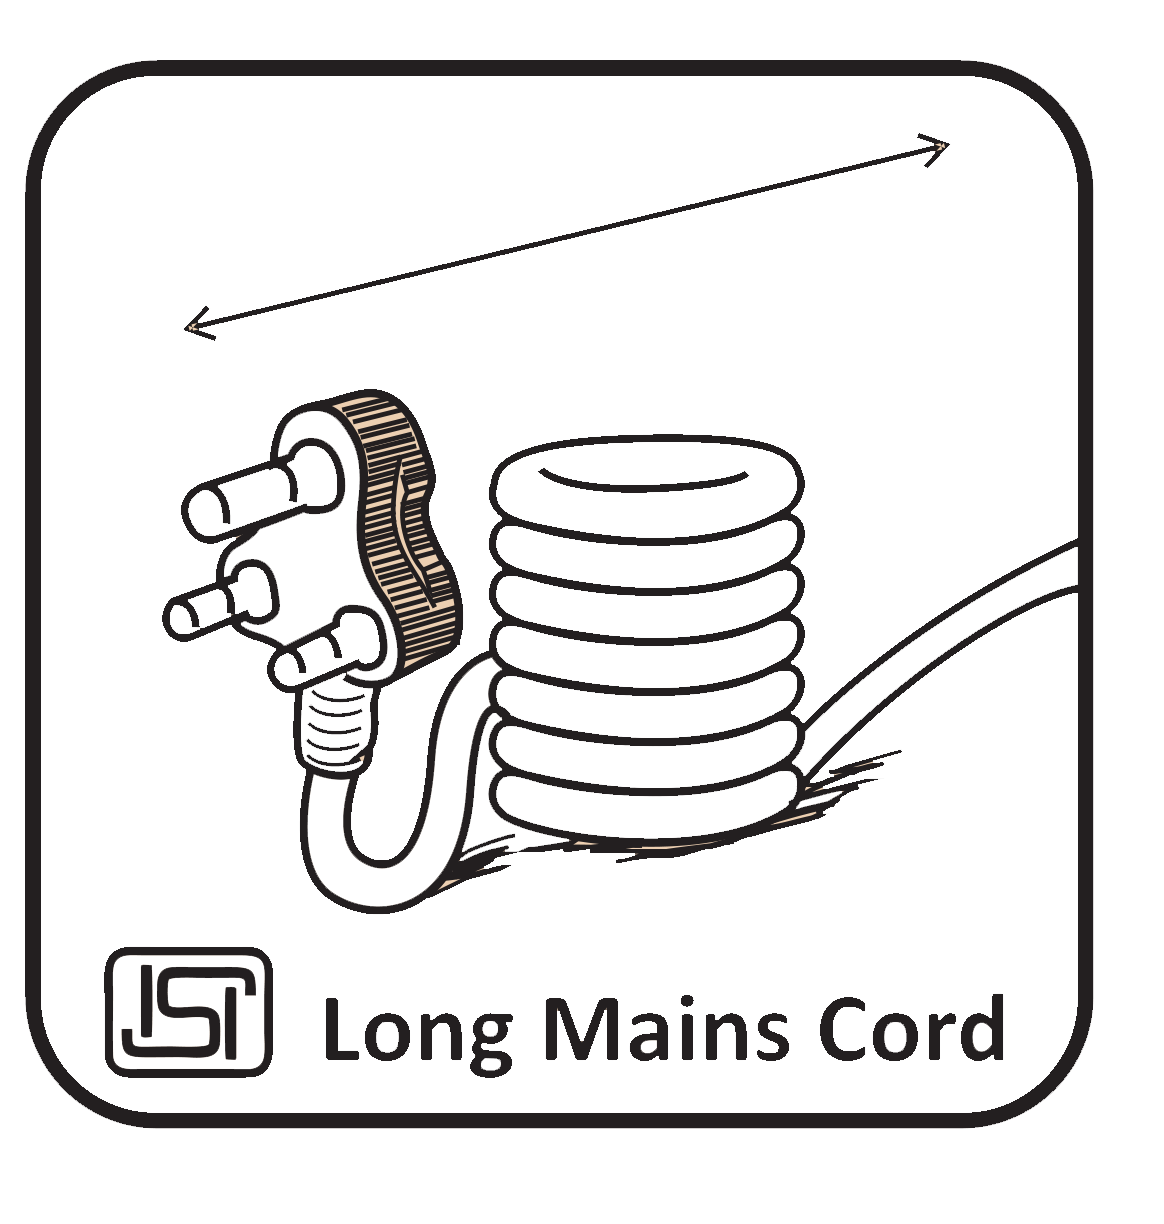 Long mains cord icon